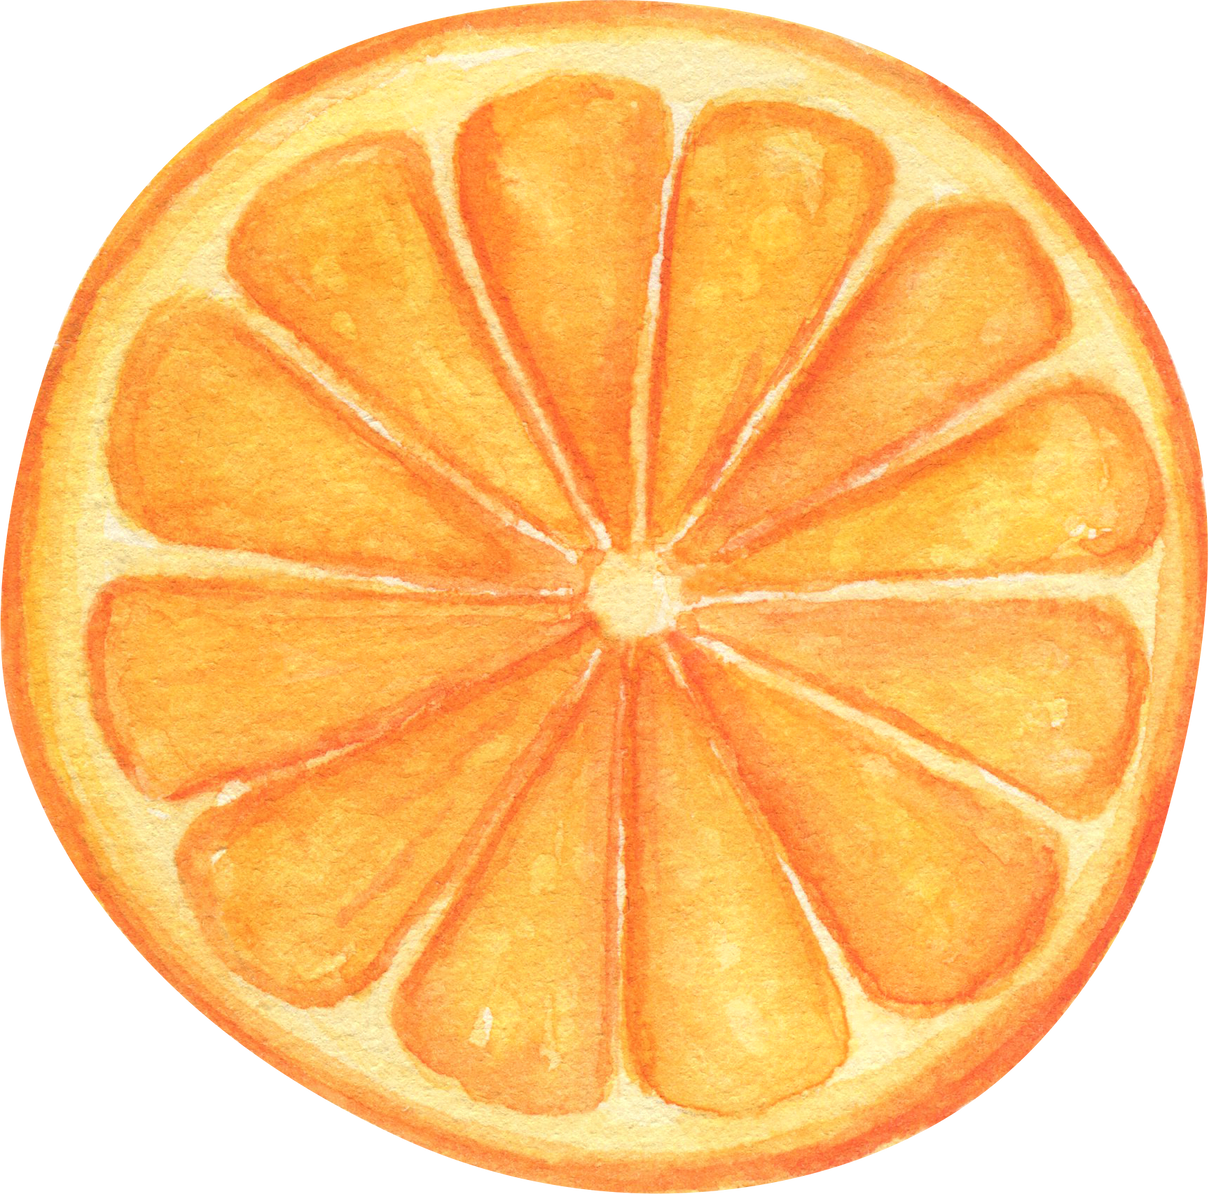 Orange slice watercolor illustration